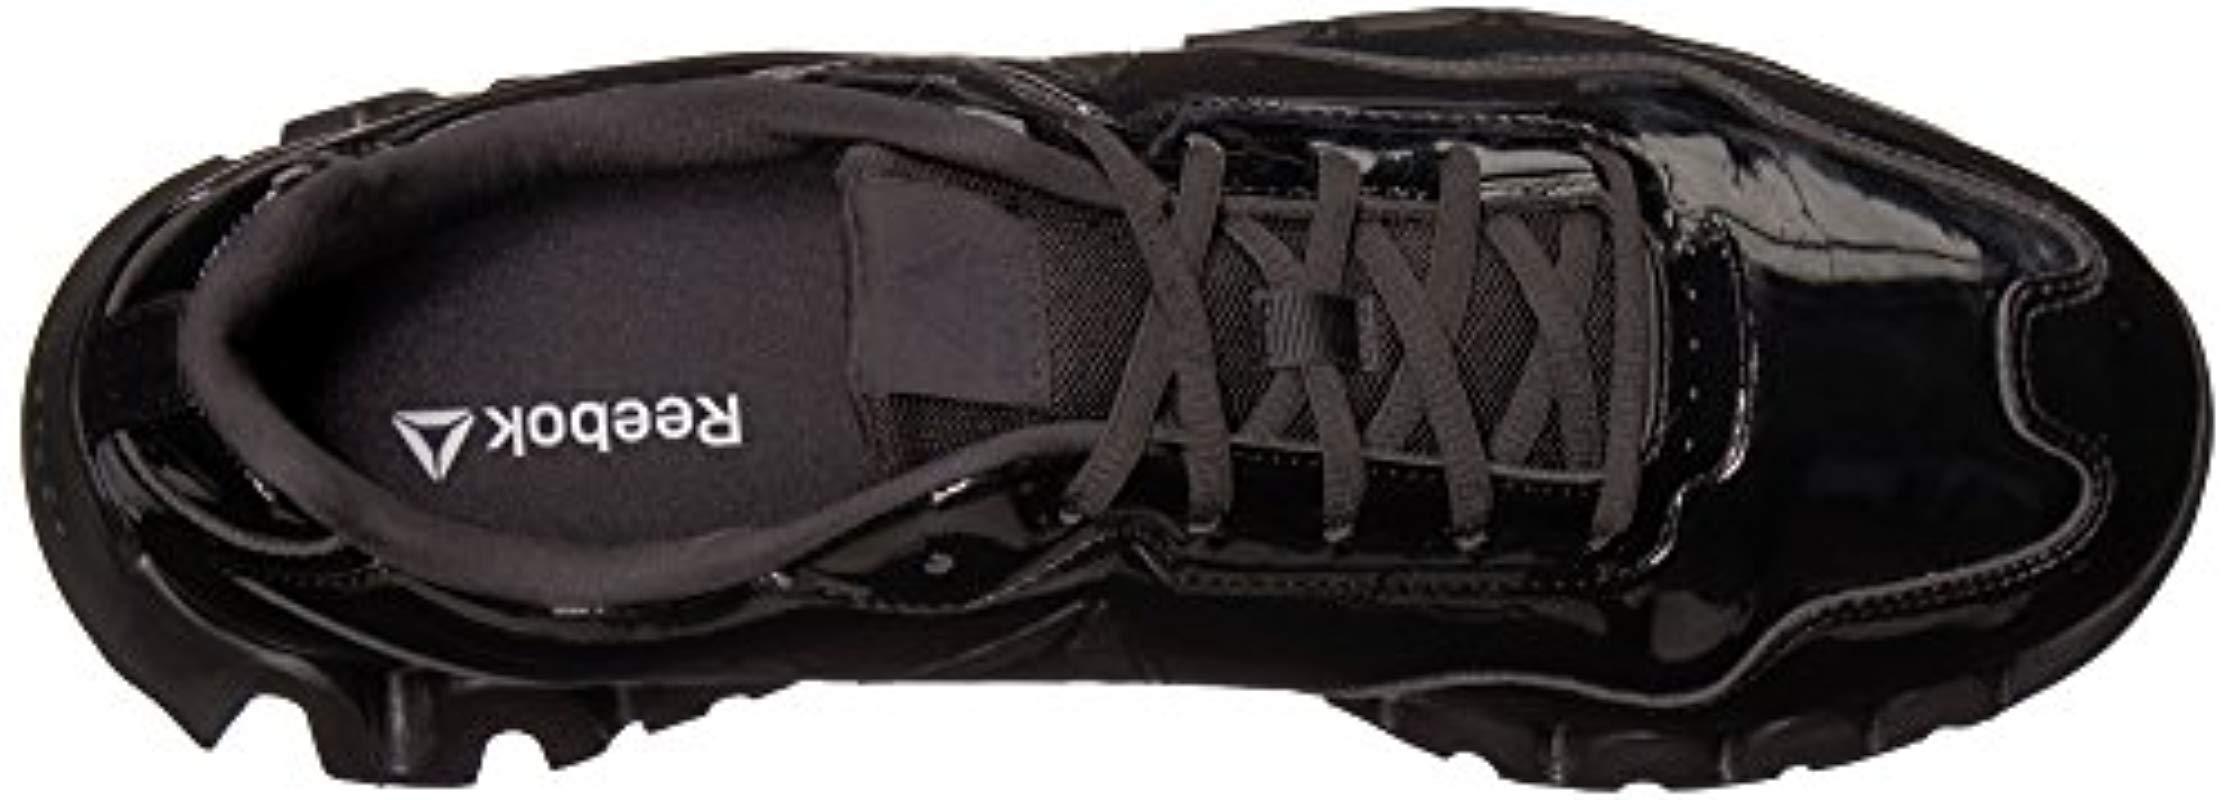 Reebok Rubber Se Shoe - Running in Black/Black/Patent (Black) for Men | Lyst